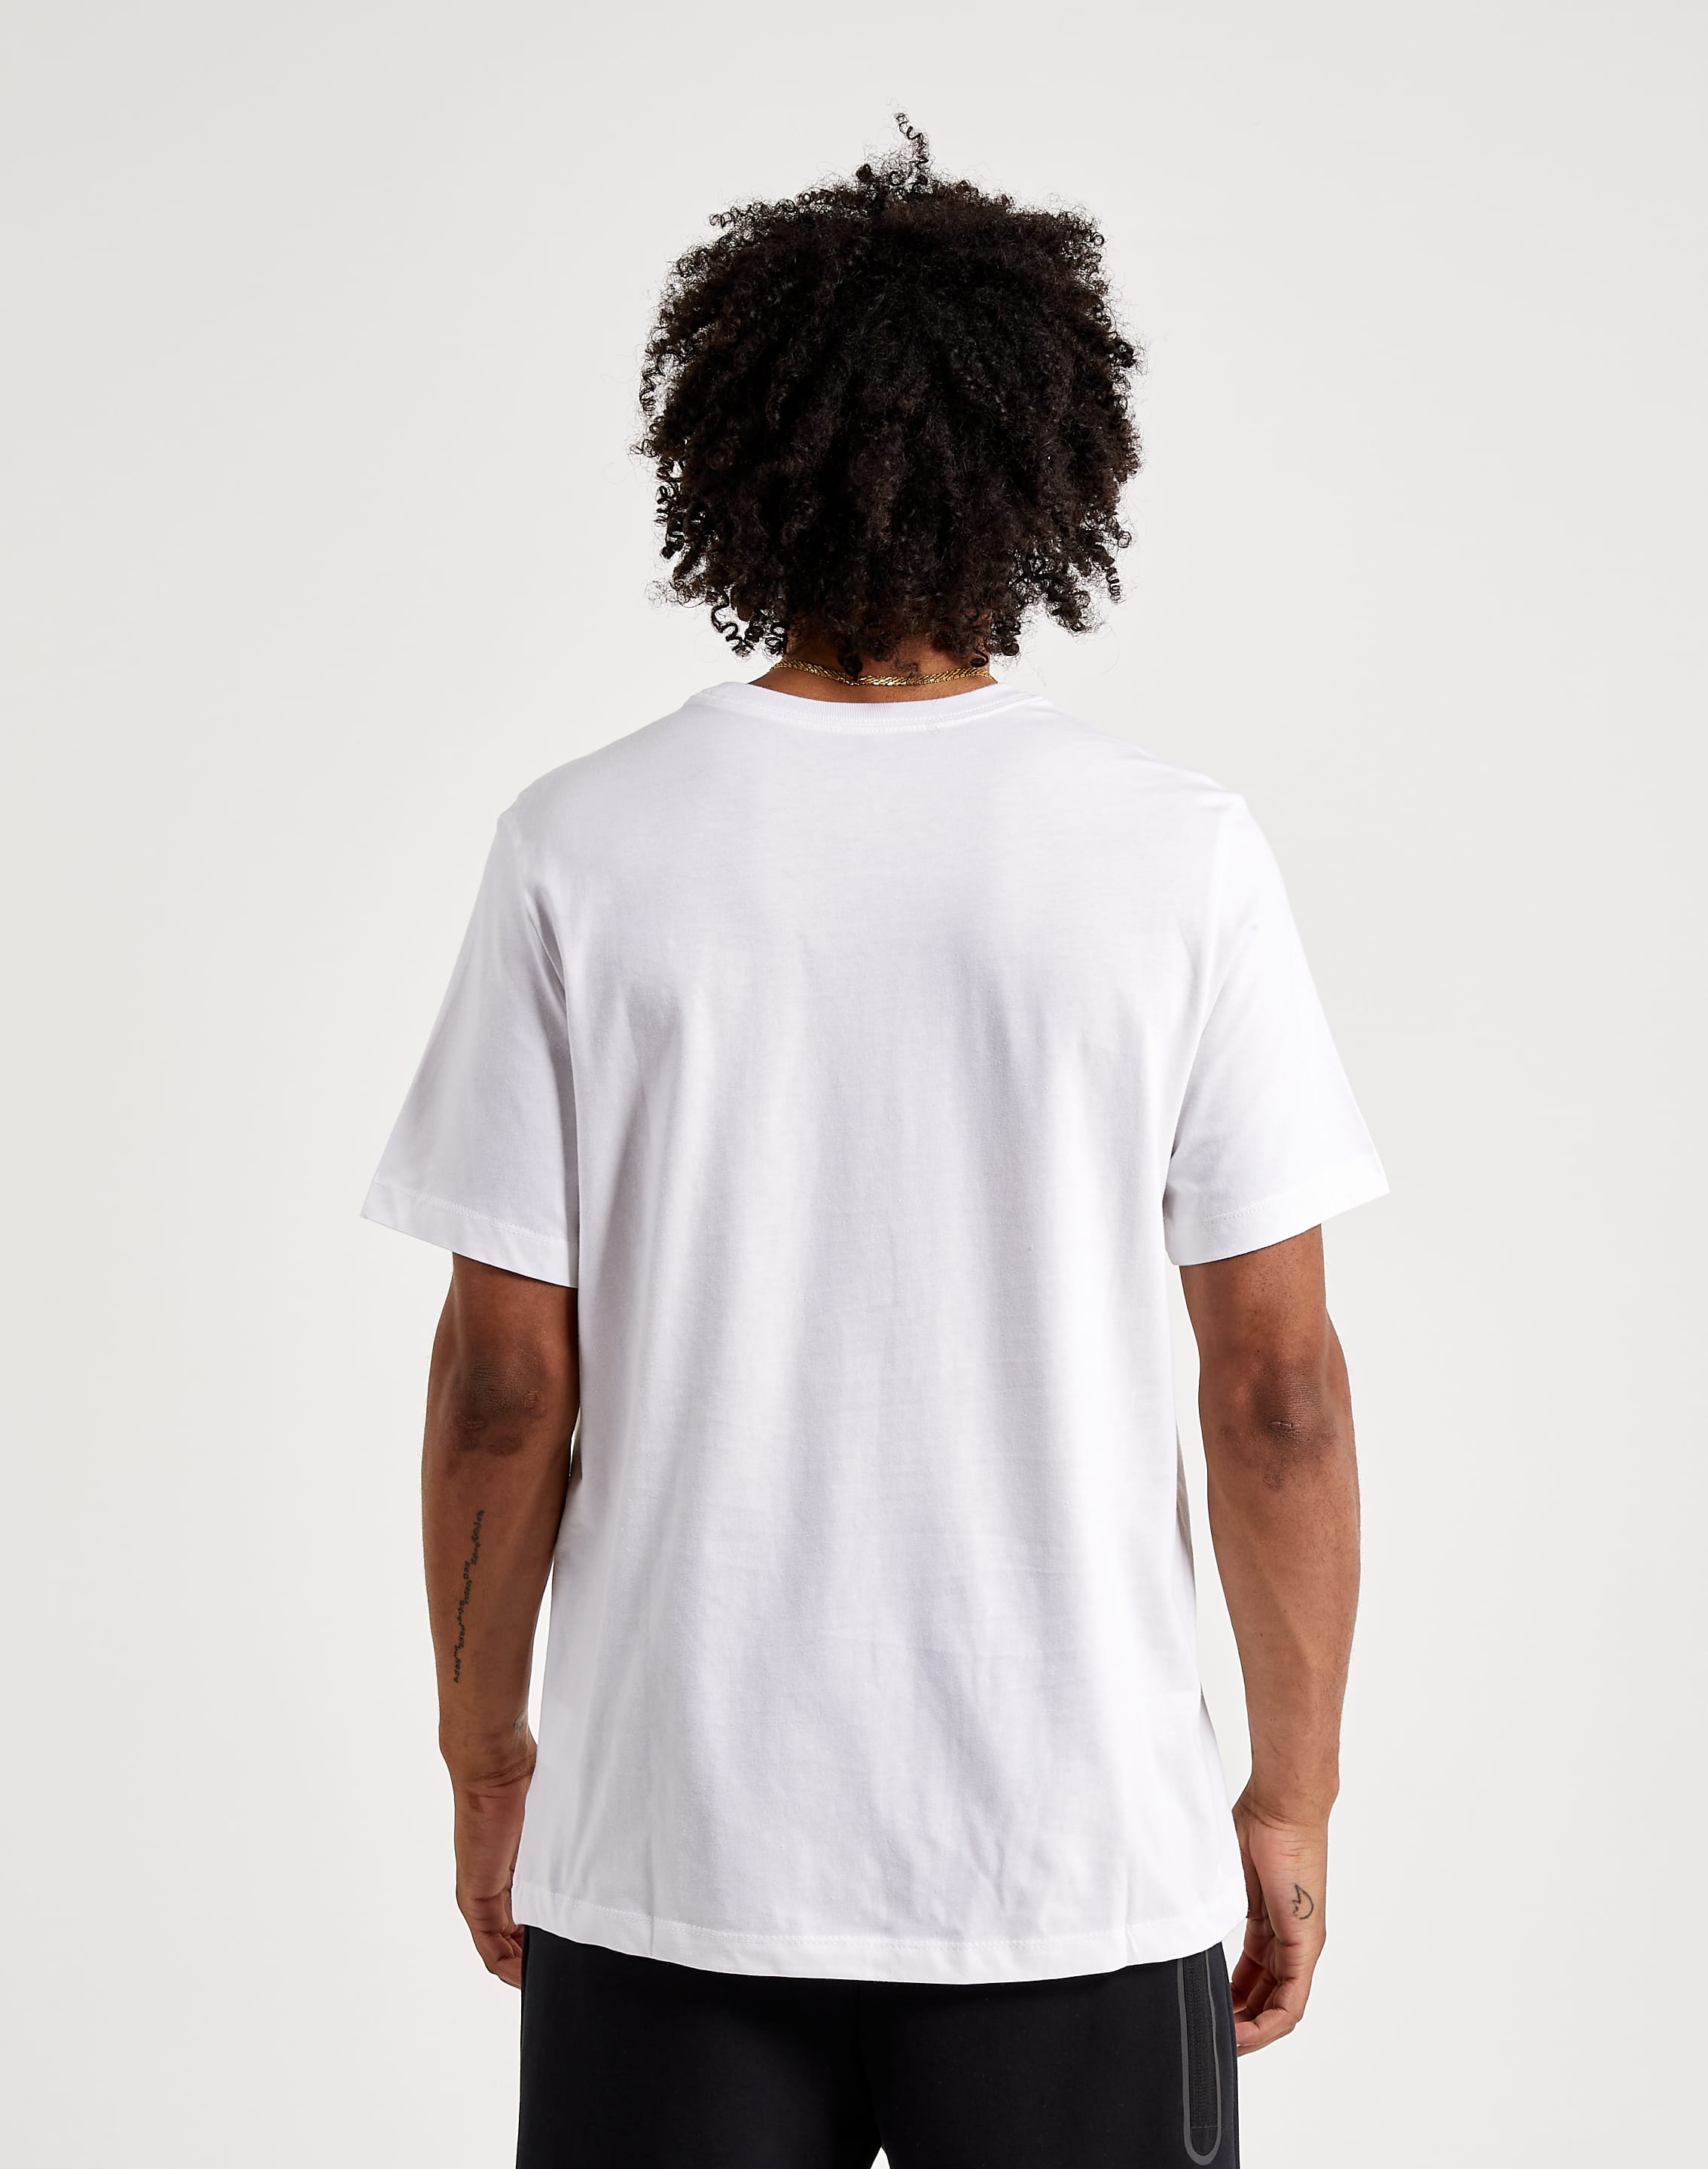 Nike T-Shirt Designs — Pixel Hall of Fame